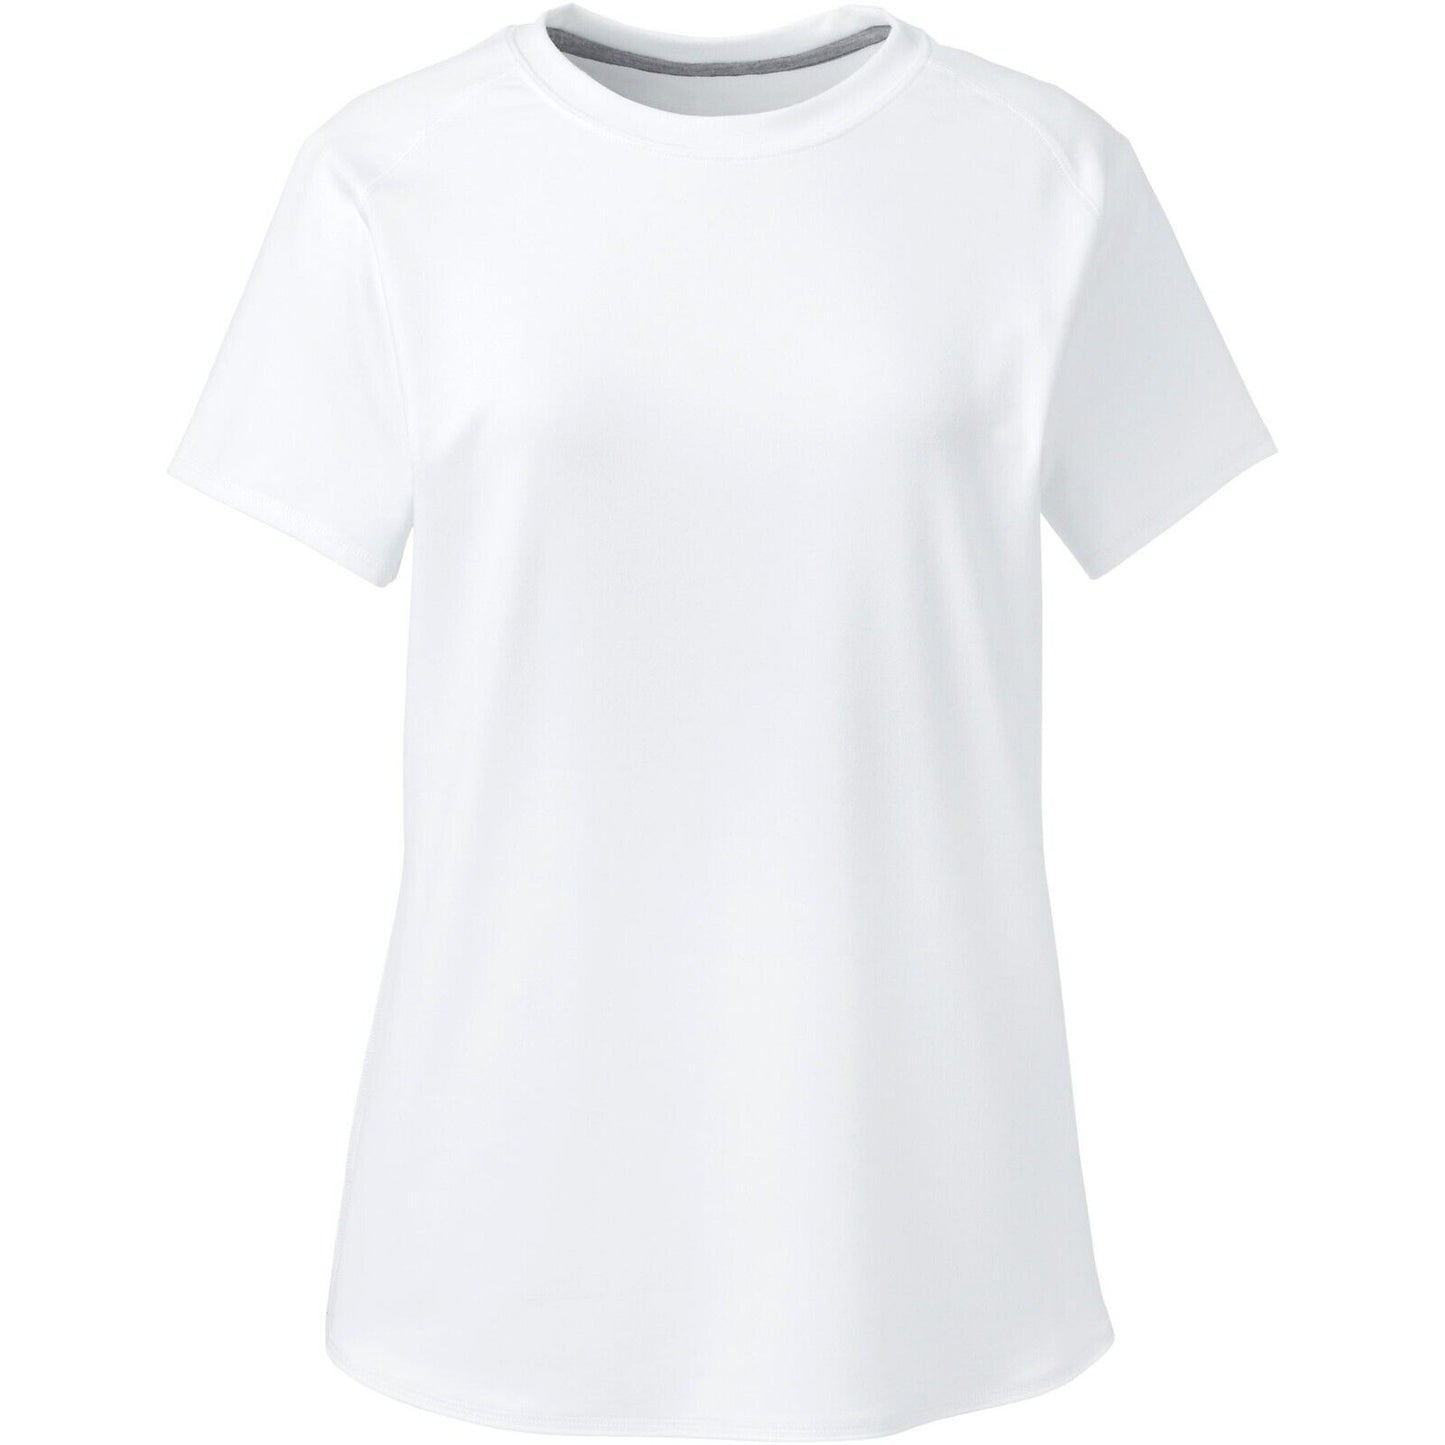 Women's Short Sleeve Active Gym T-shirt Size L